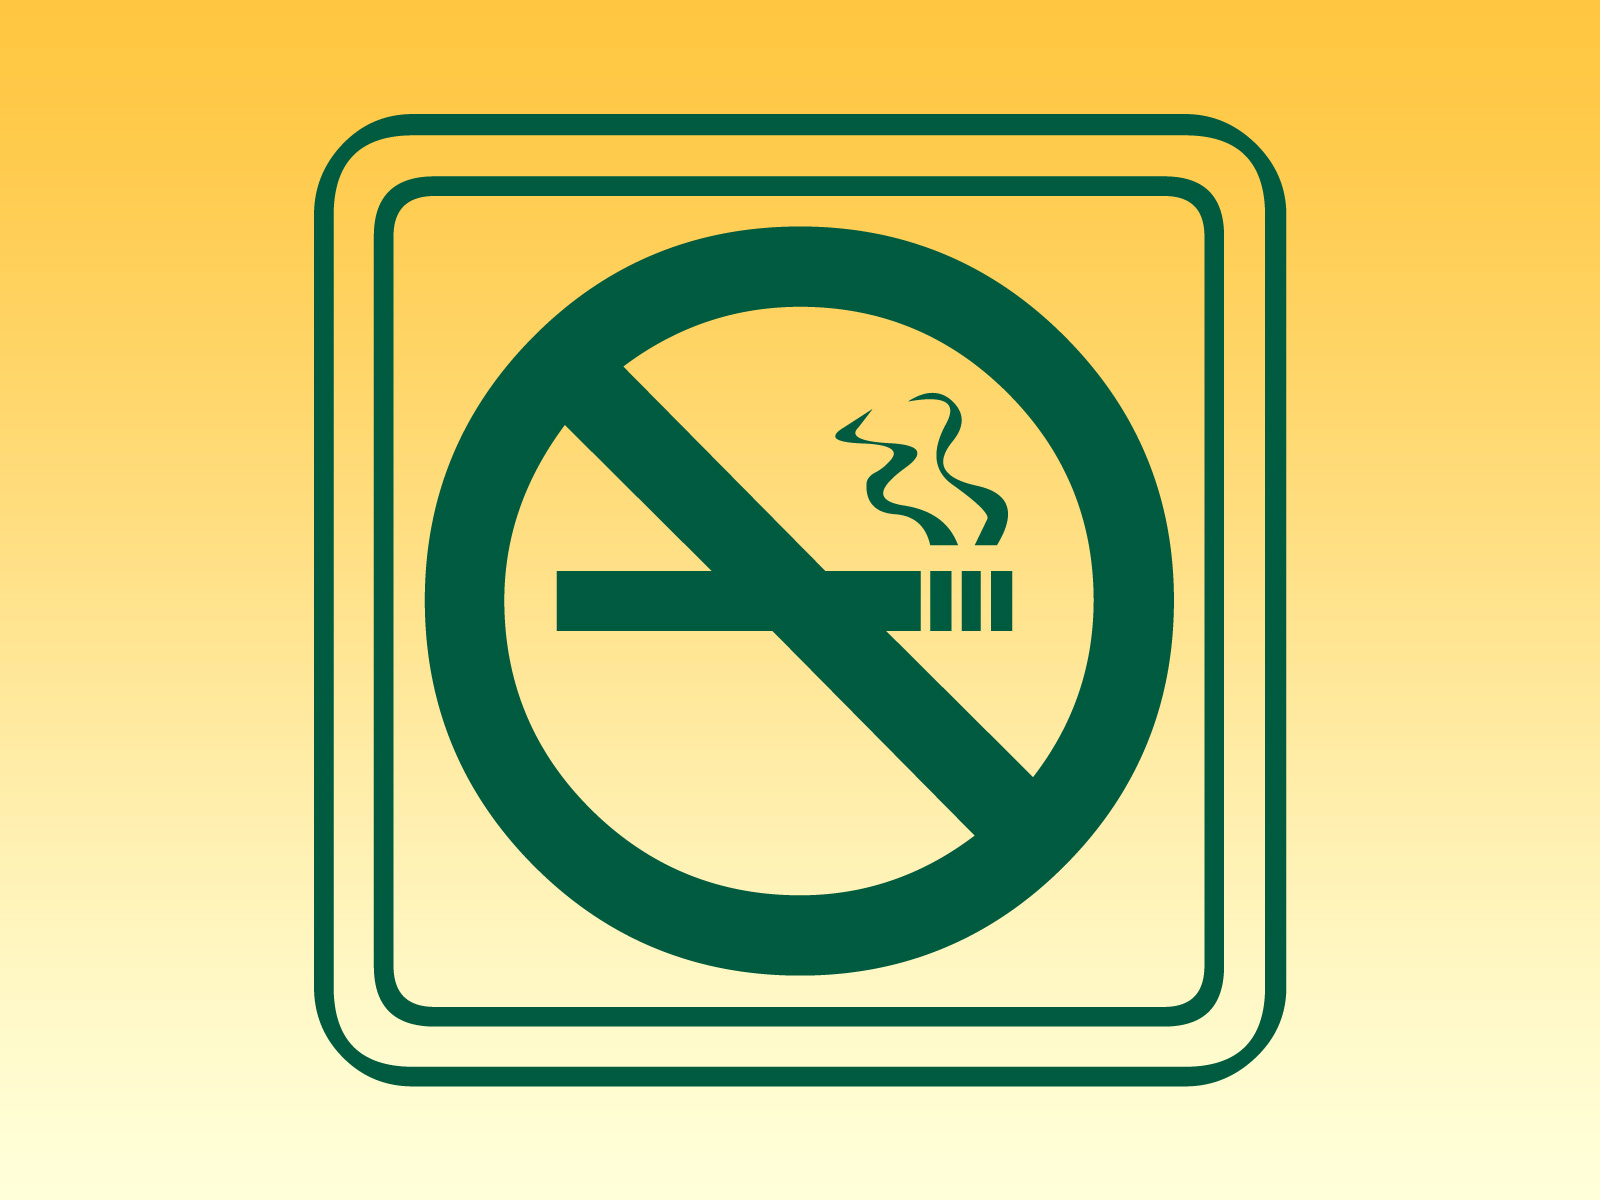 No smoking icon sign